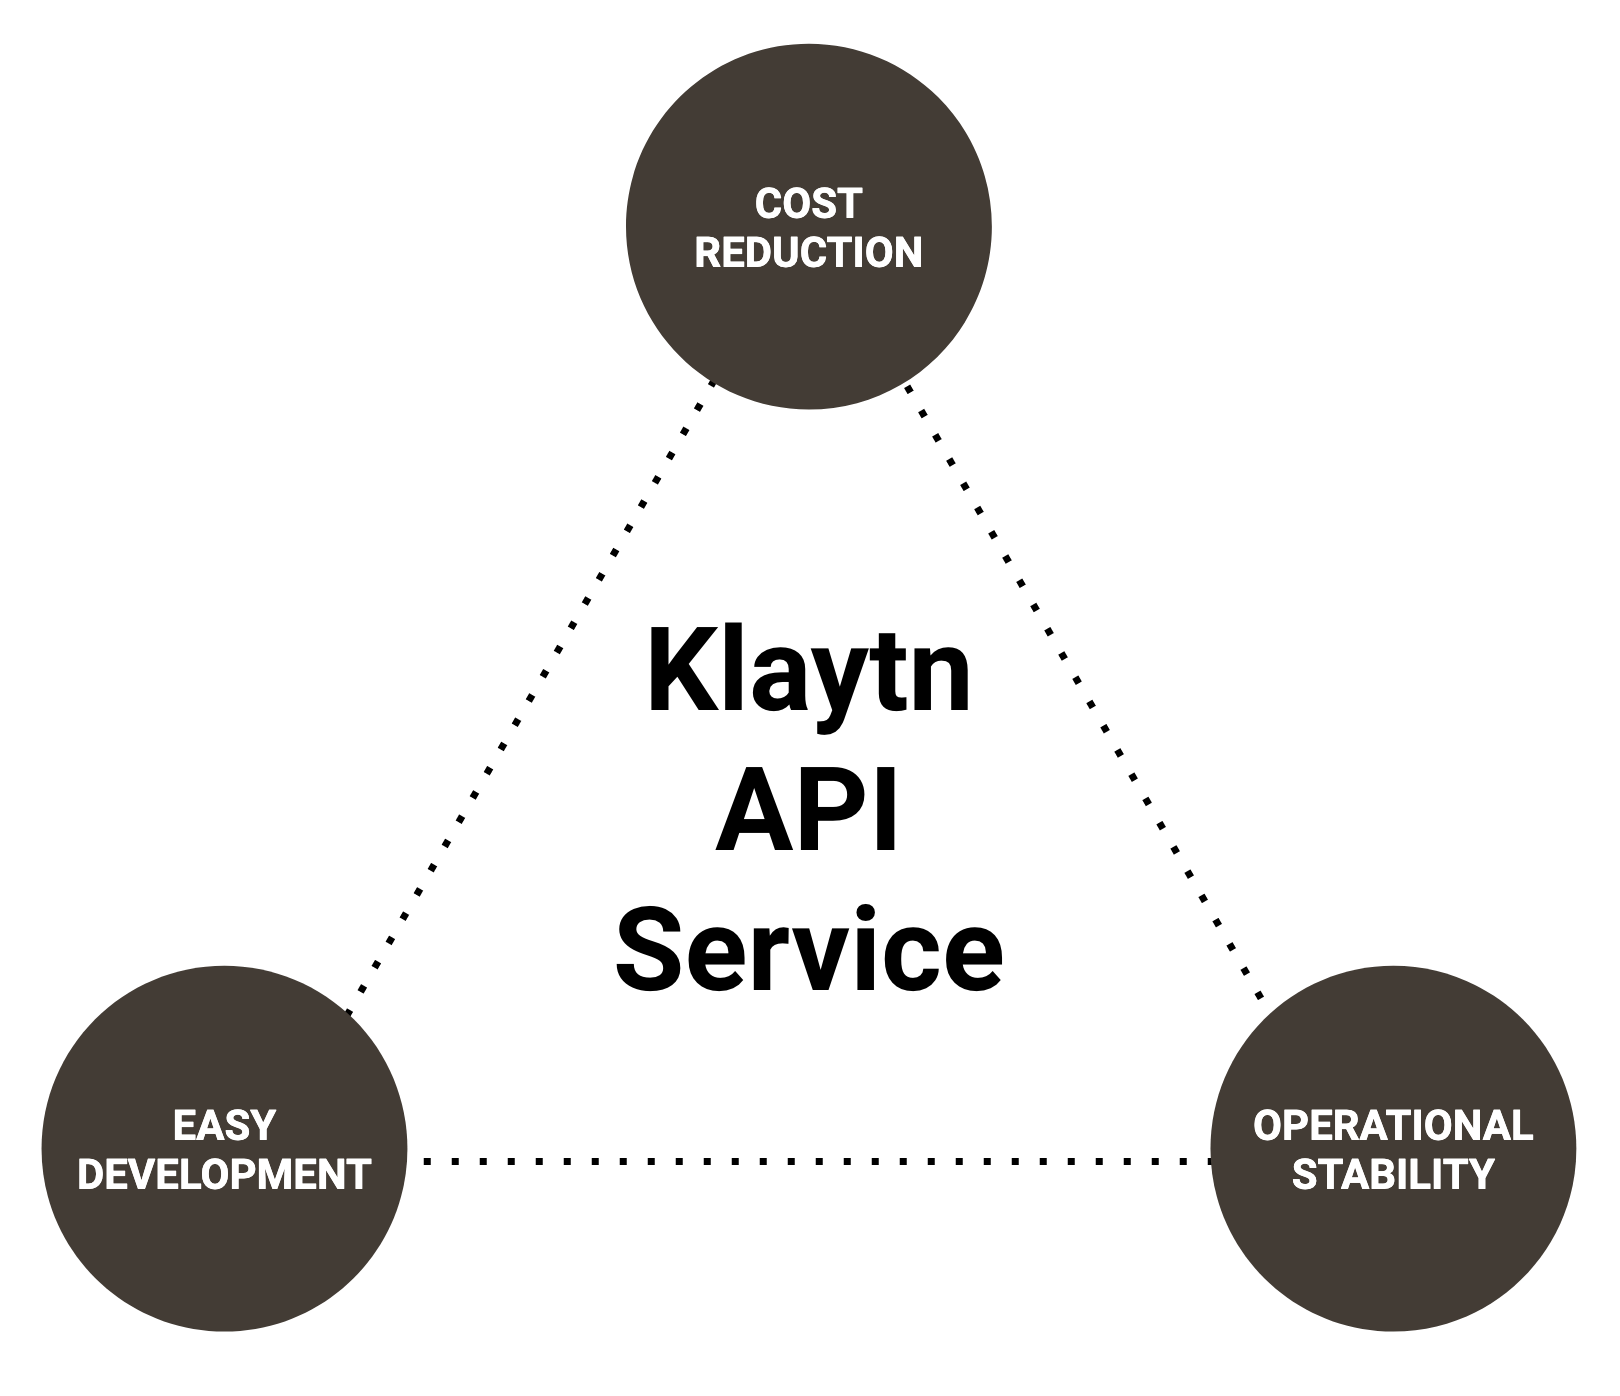 Klaytn API Service의 장점